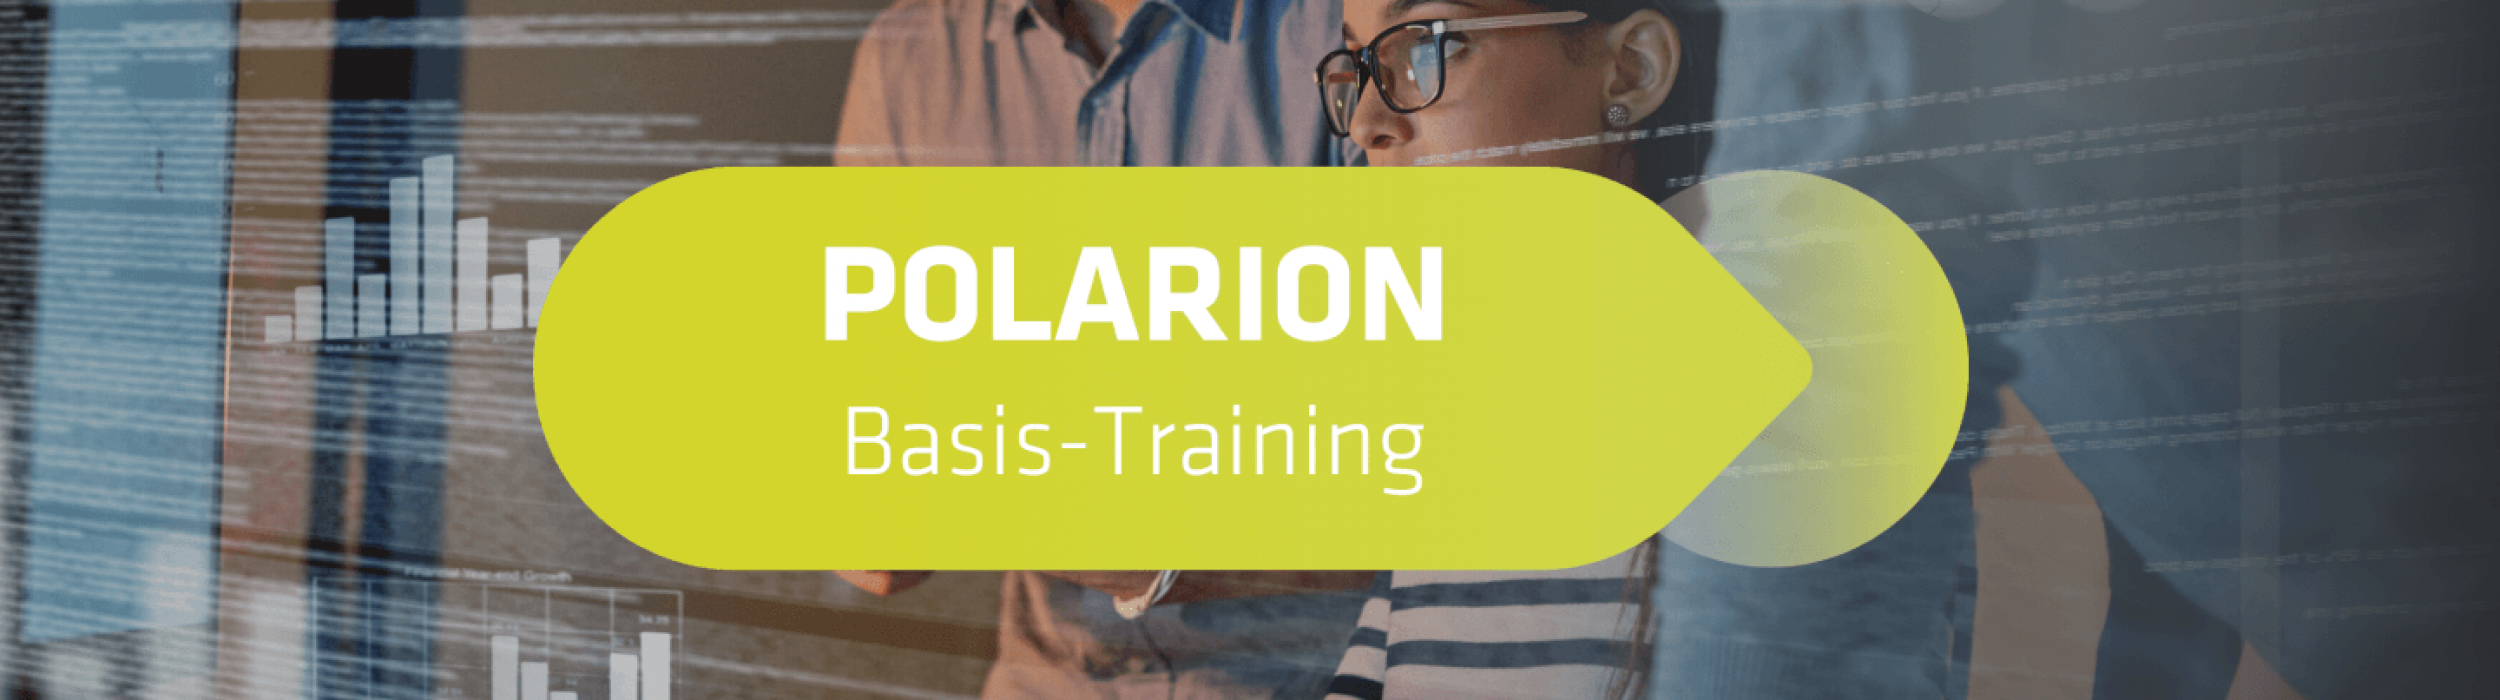 Polarion Basis-Training